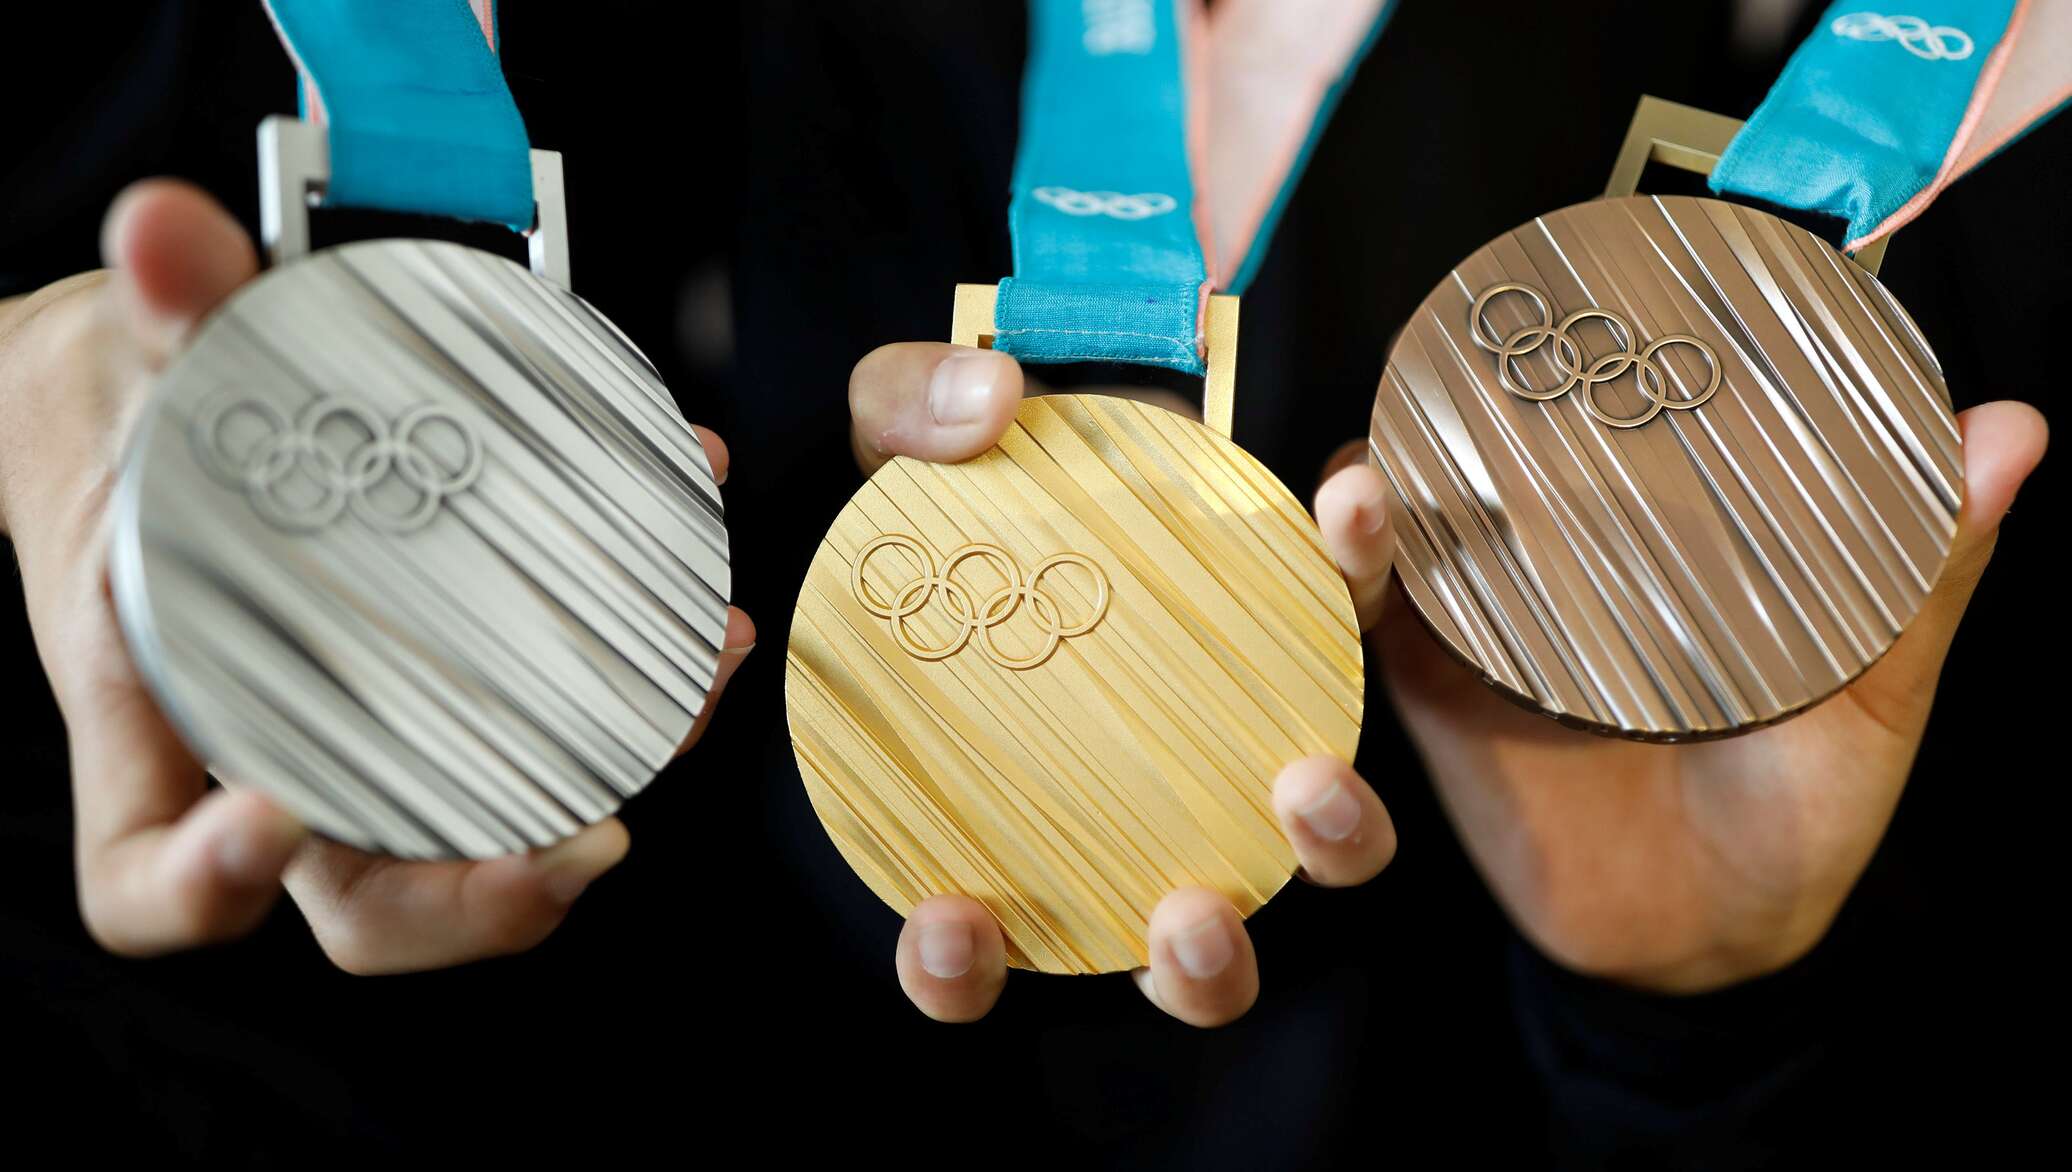 Награда 2018. Медали Пхенчхан 2018. Олимпийские медали Пхенчхан 2018. Золотая медаль Олимпийских игр 2018.